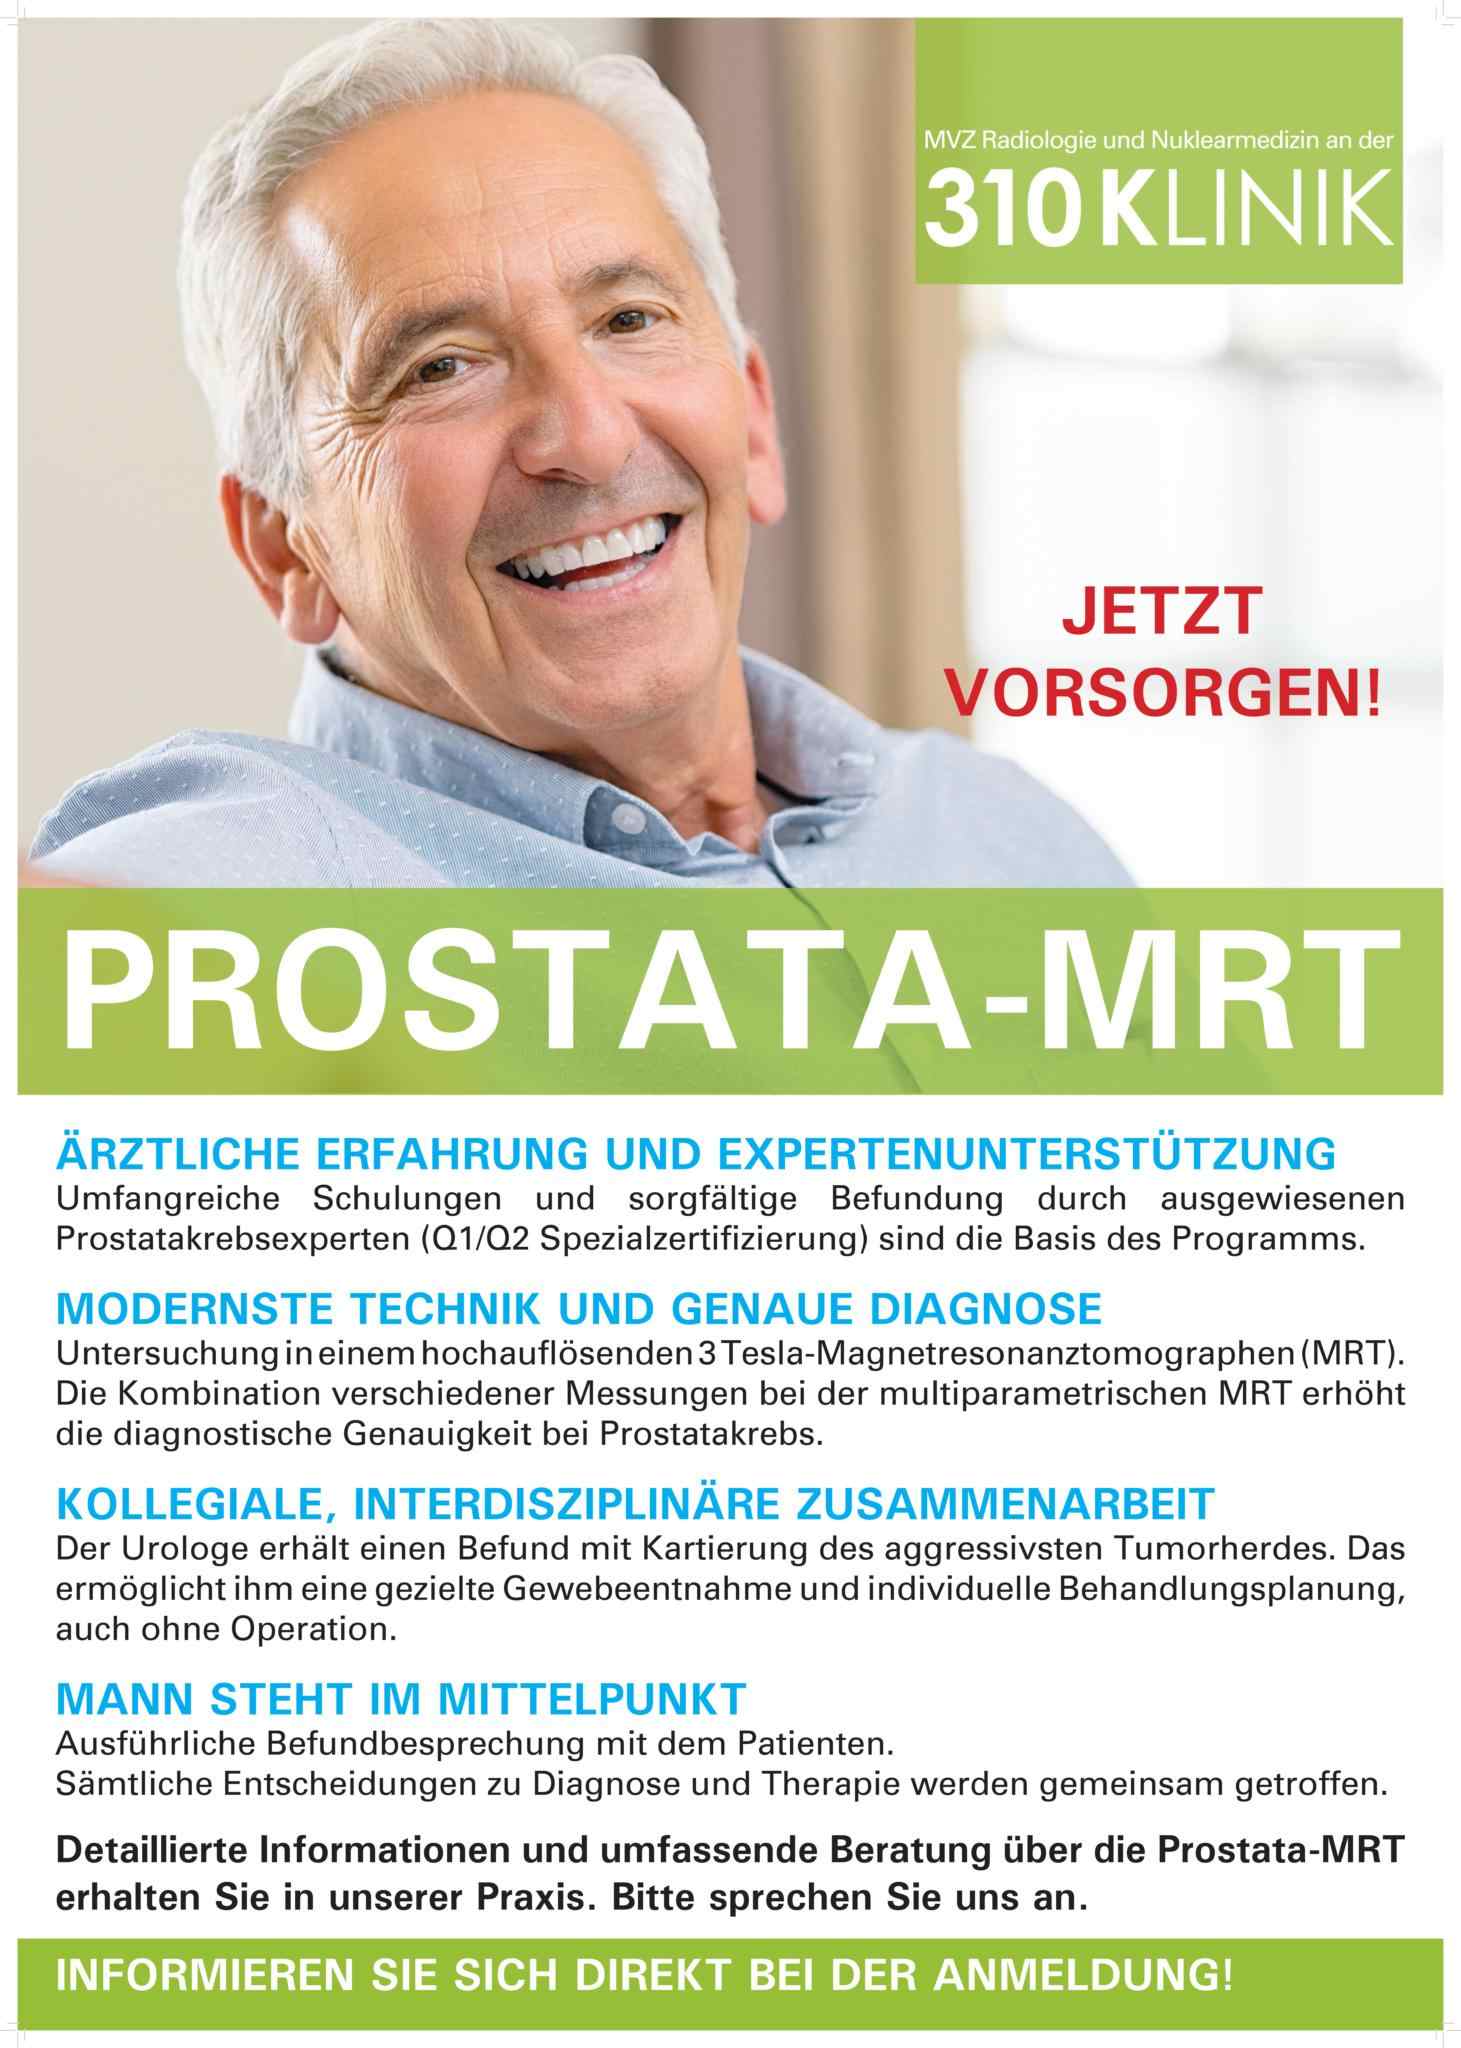 mrt prostata genauigkeit